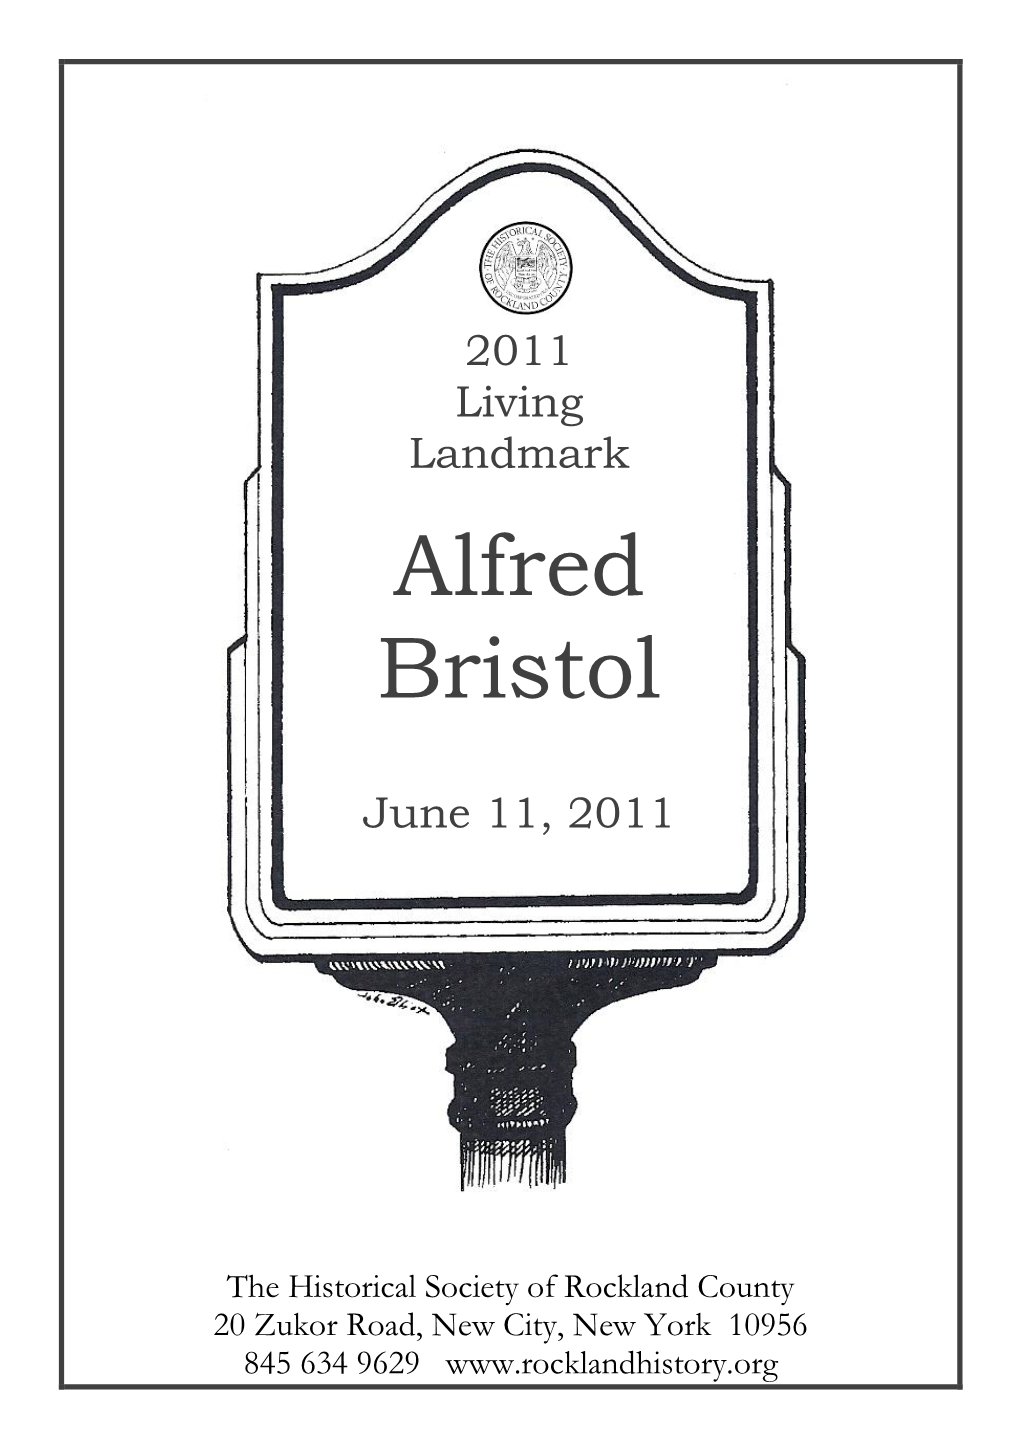 Alfred Bristol